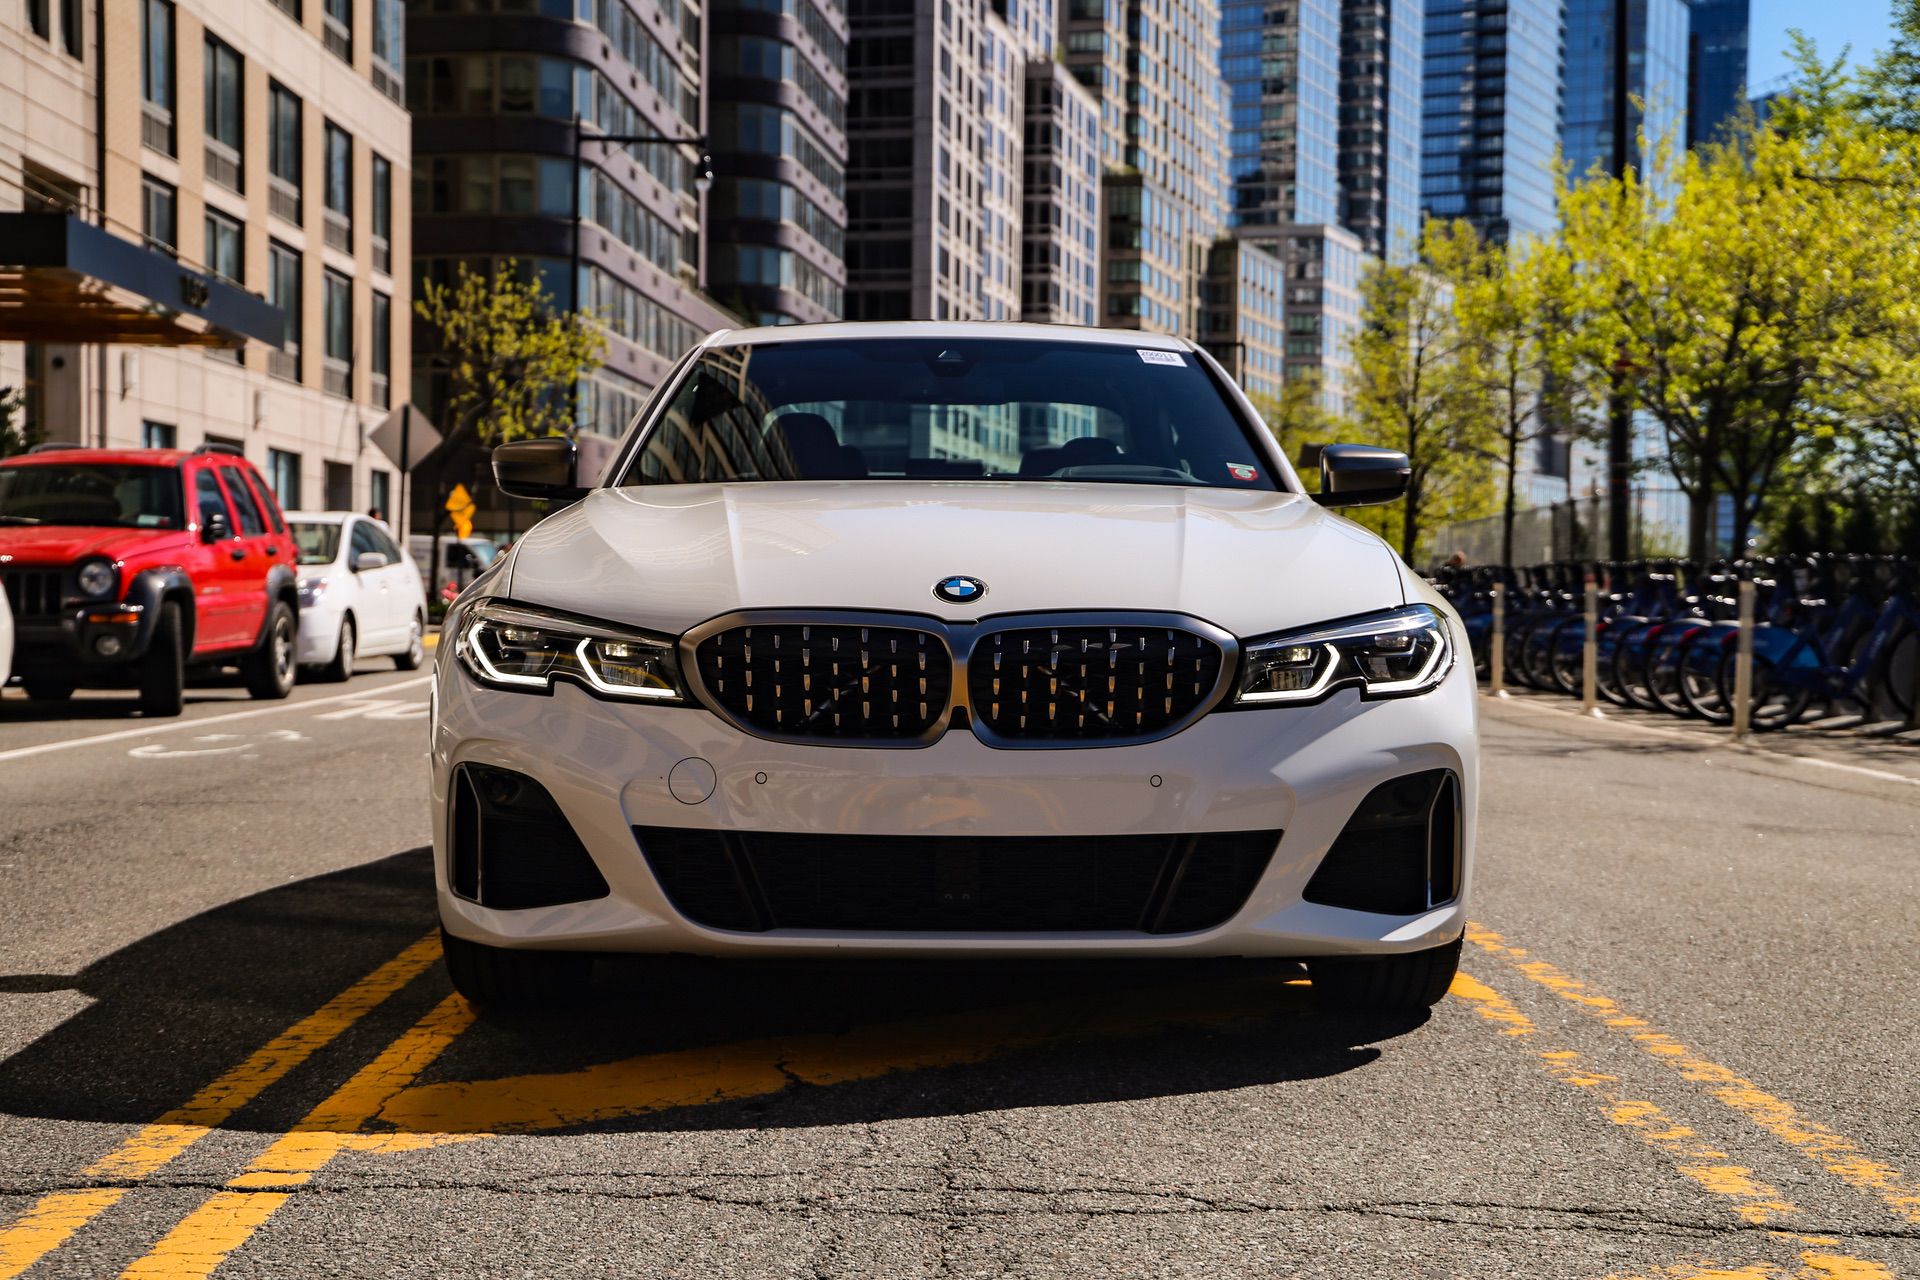 2019 BMW M340i in Alpine White - Photoshoot in NYC